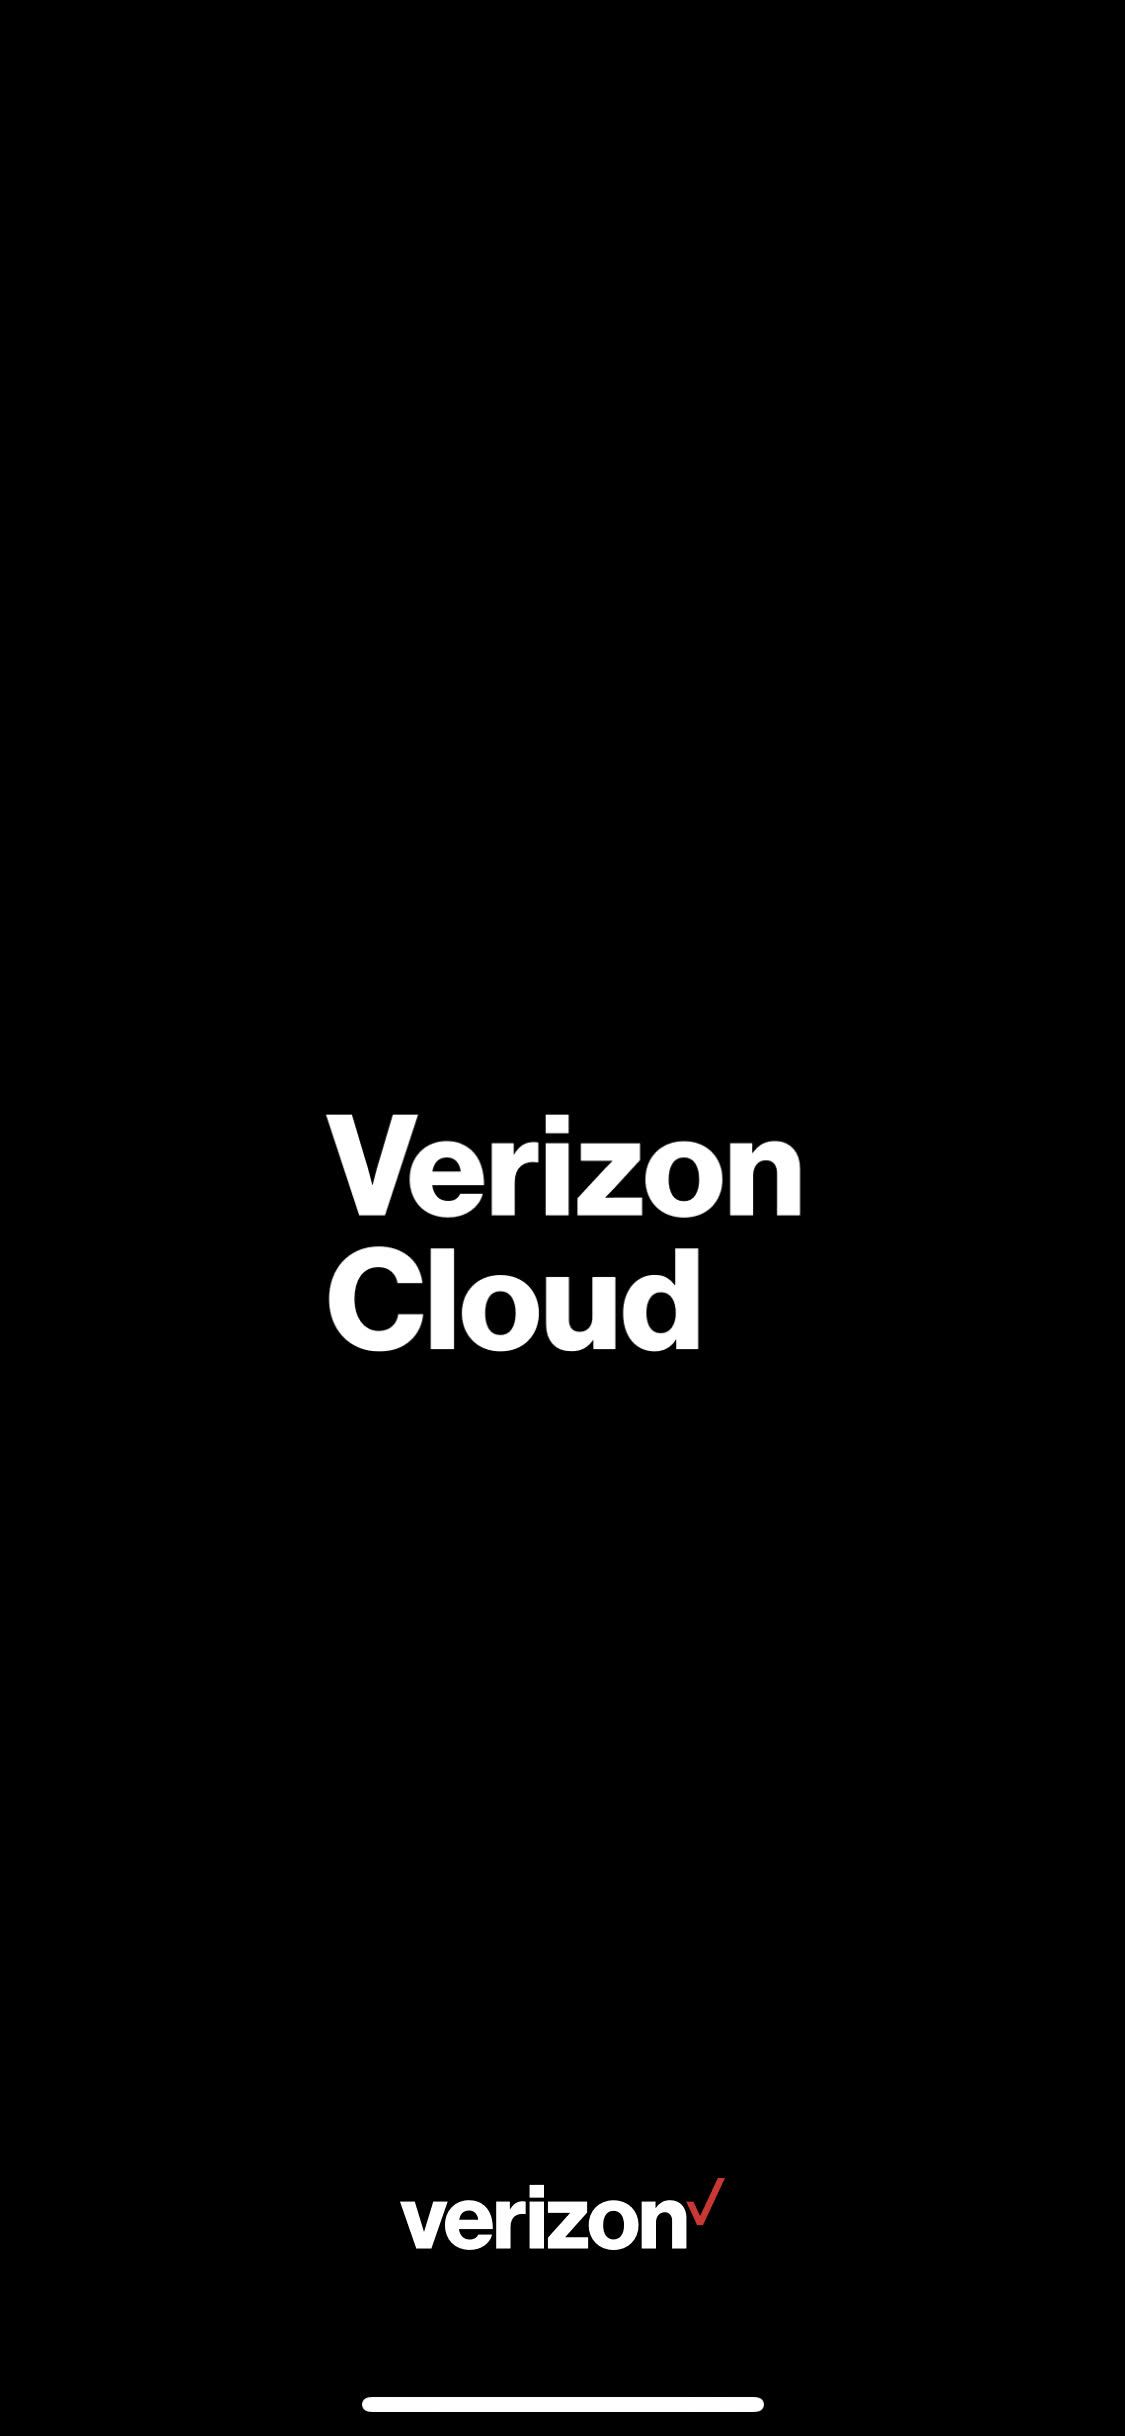 verizon cloud logo